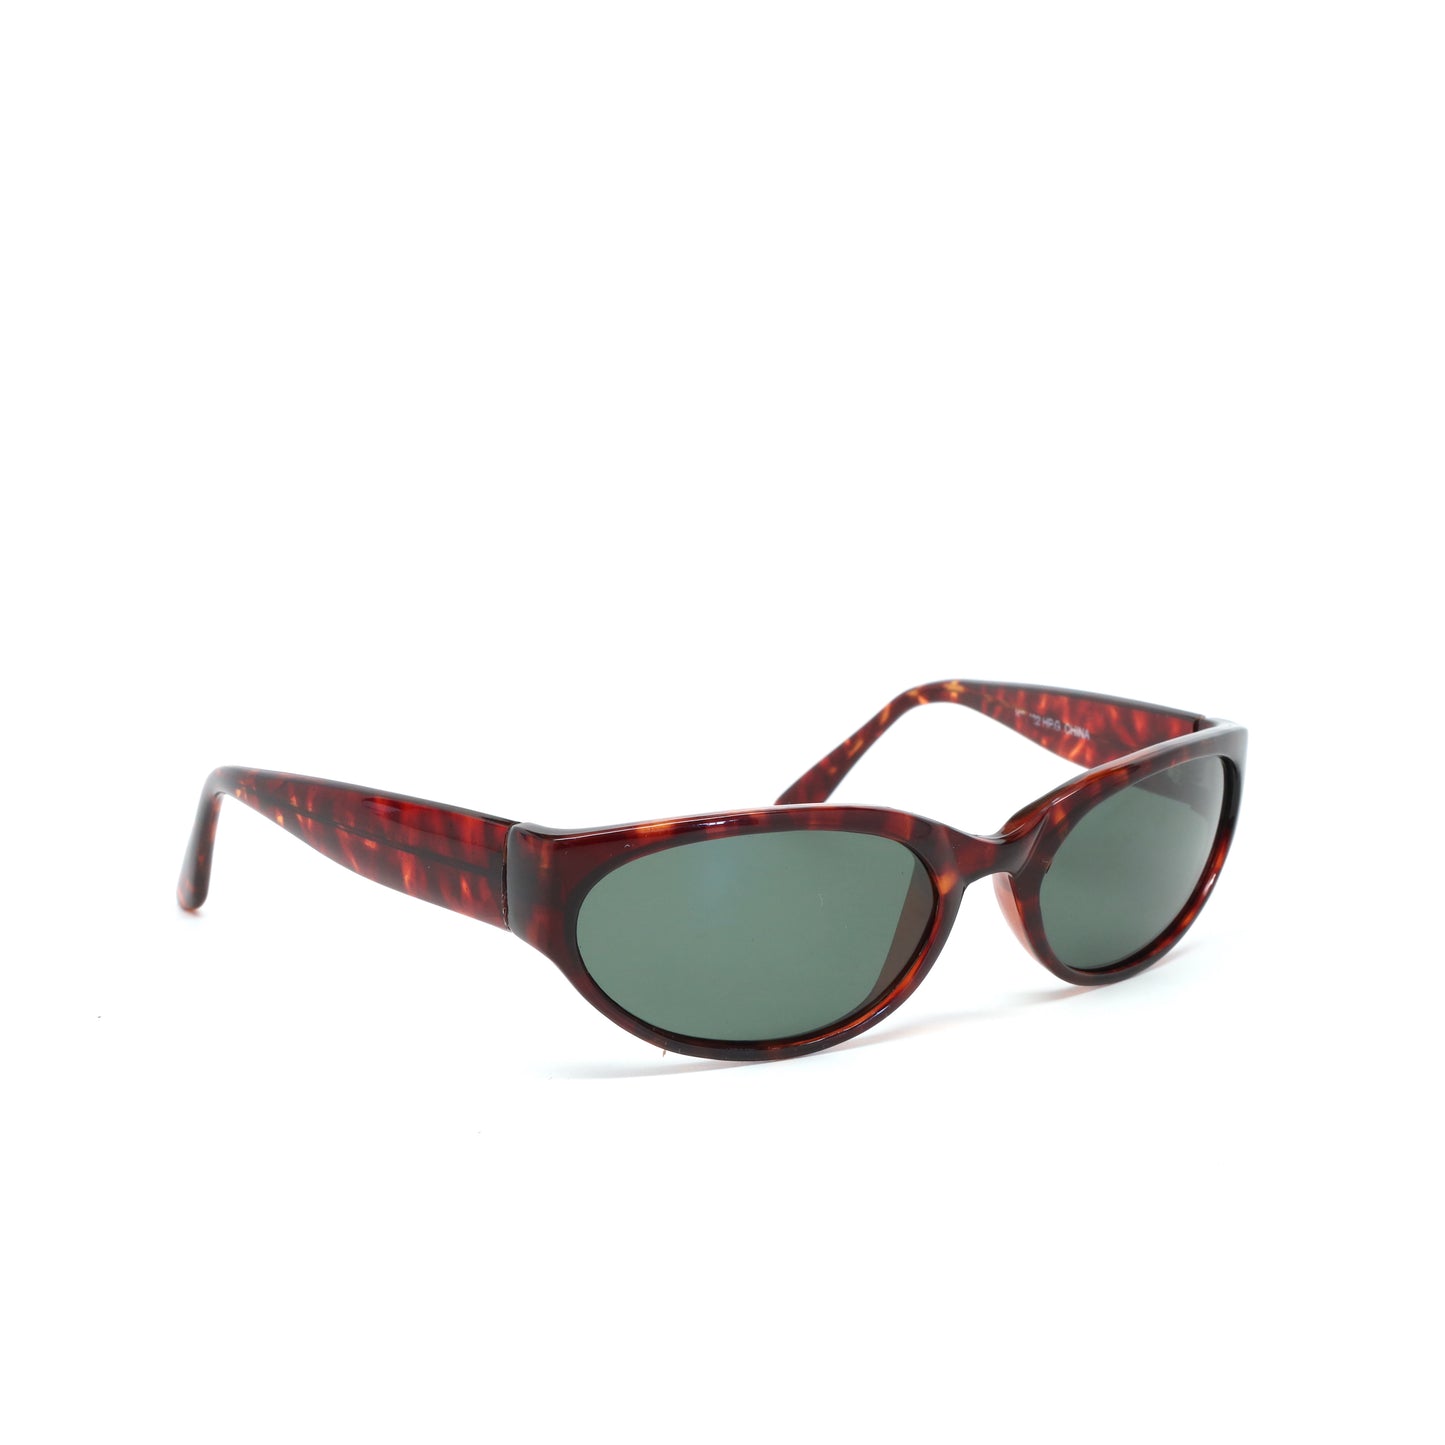 Vintage Standard Size Red Circular Frame Sunglasses - Tortoise